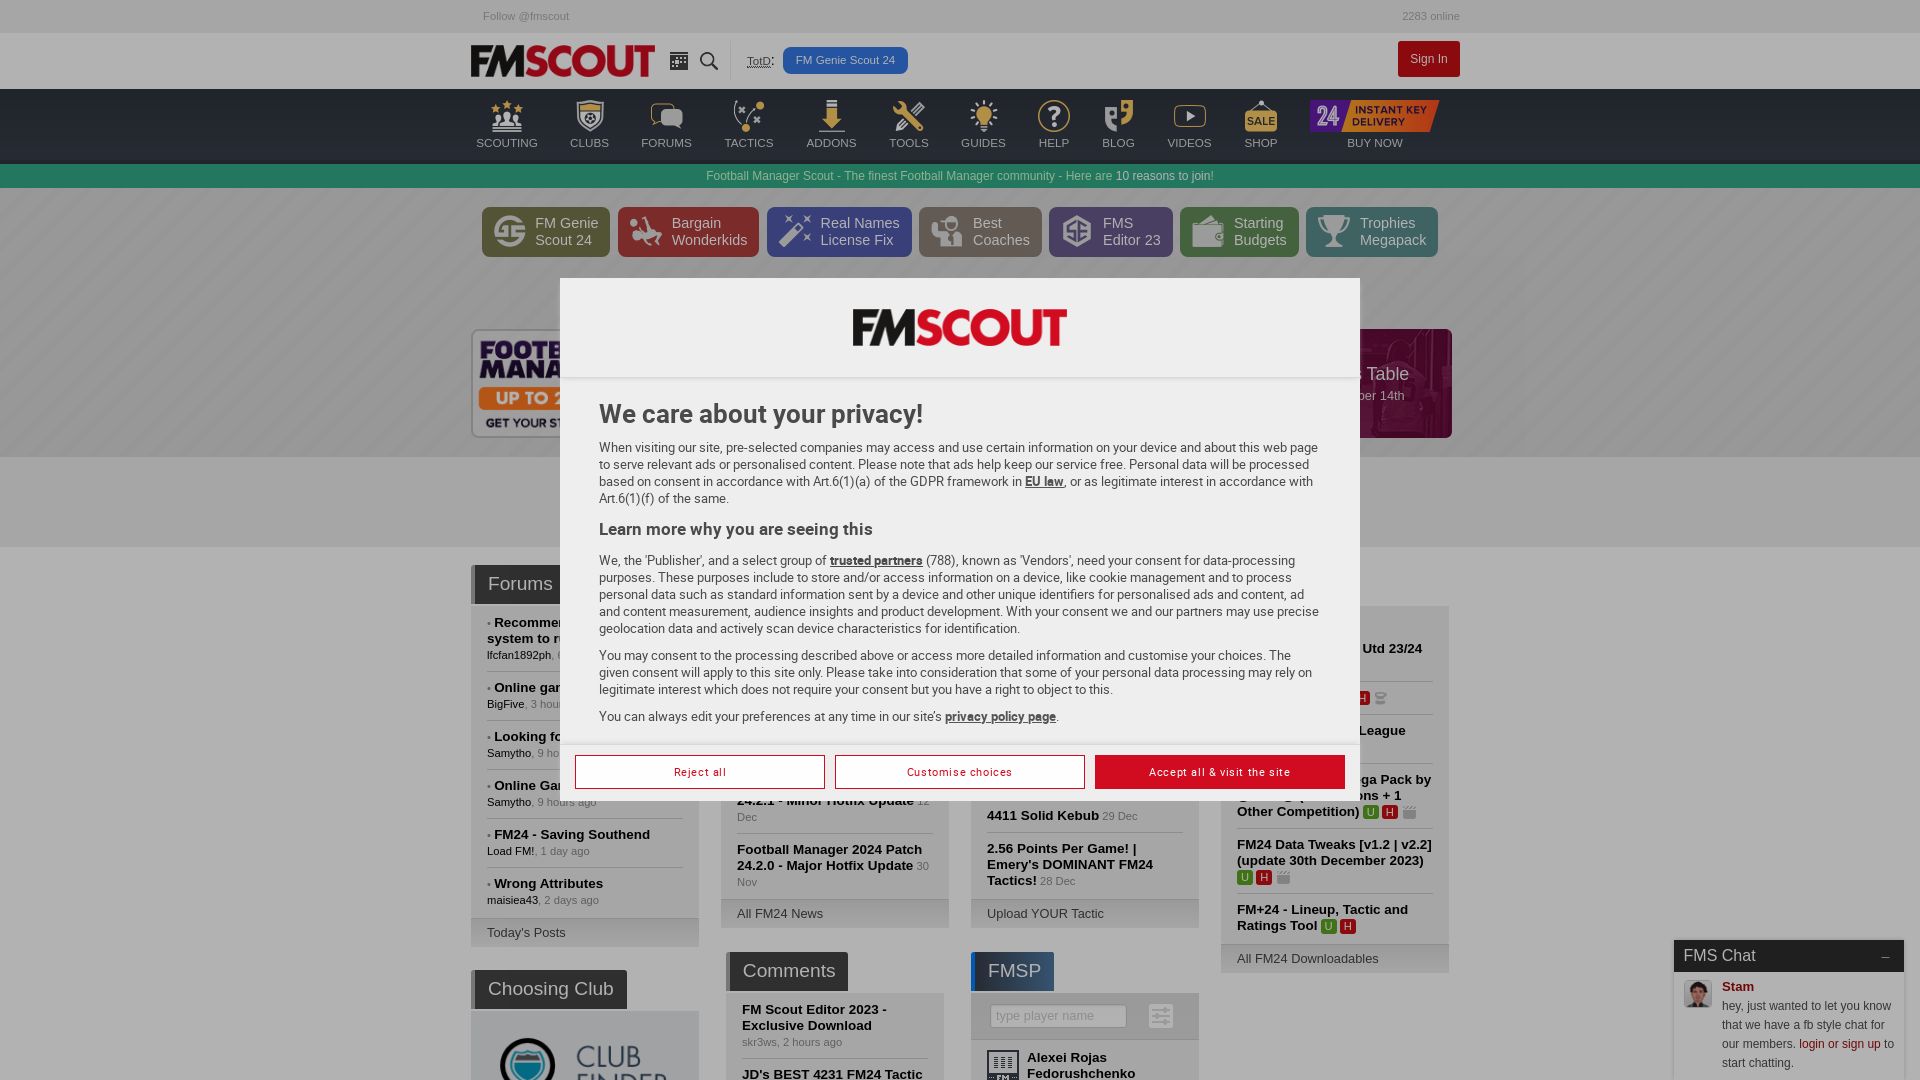 вебсайт fmscout.com Є   ONLINE